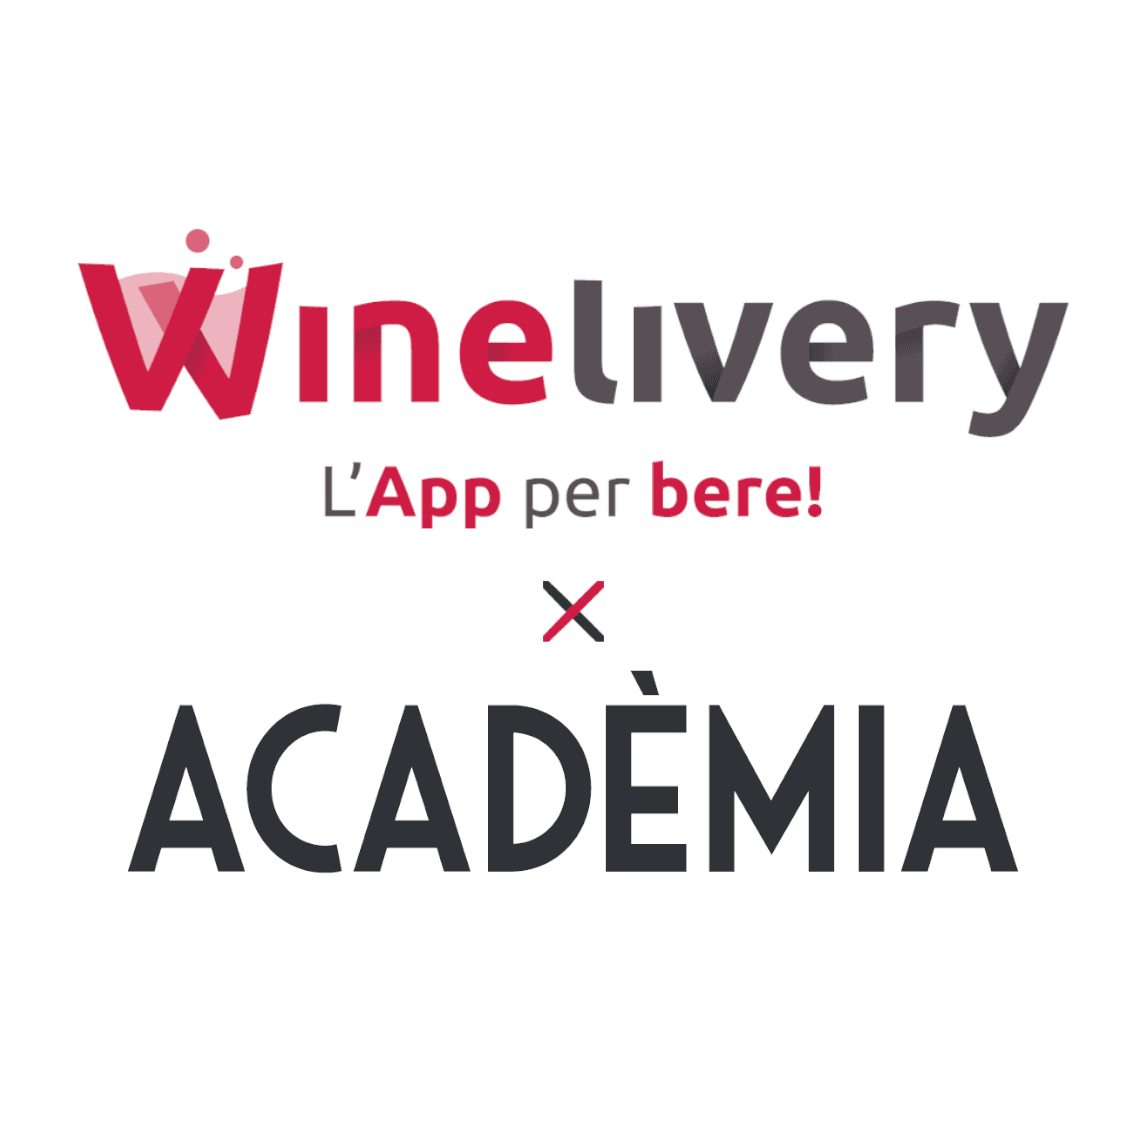 Winelivery e Academia